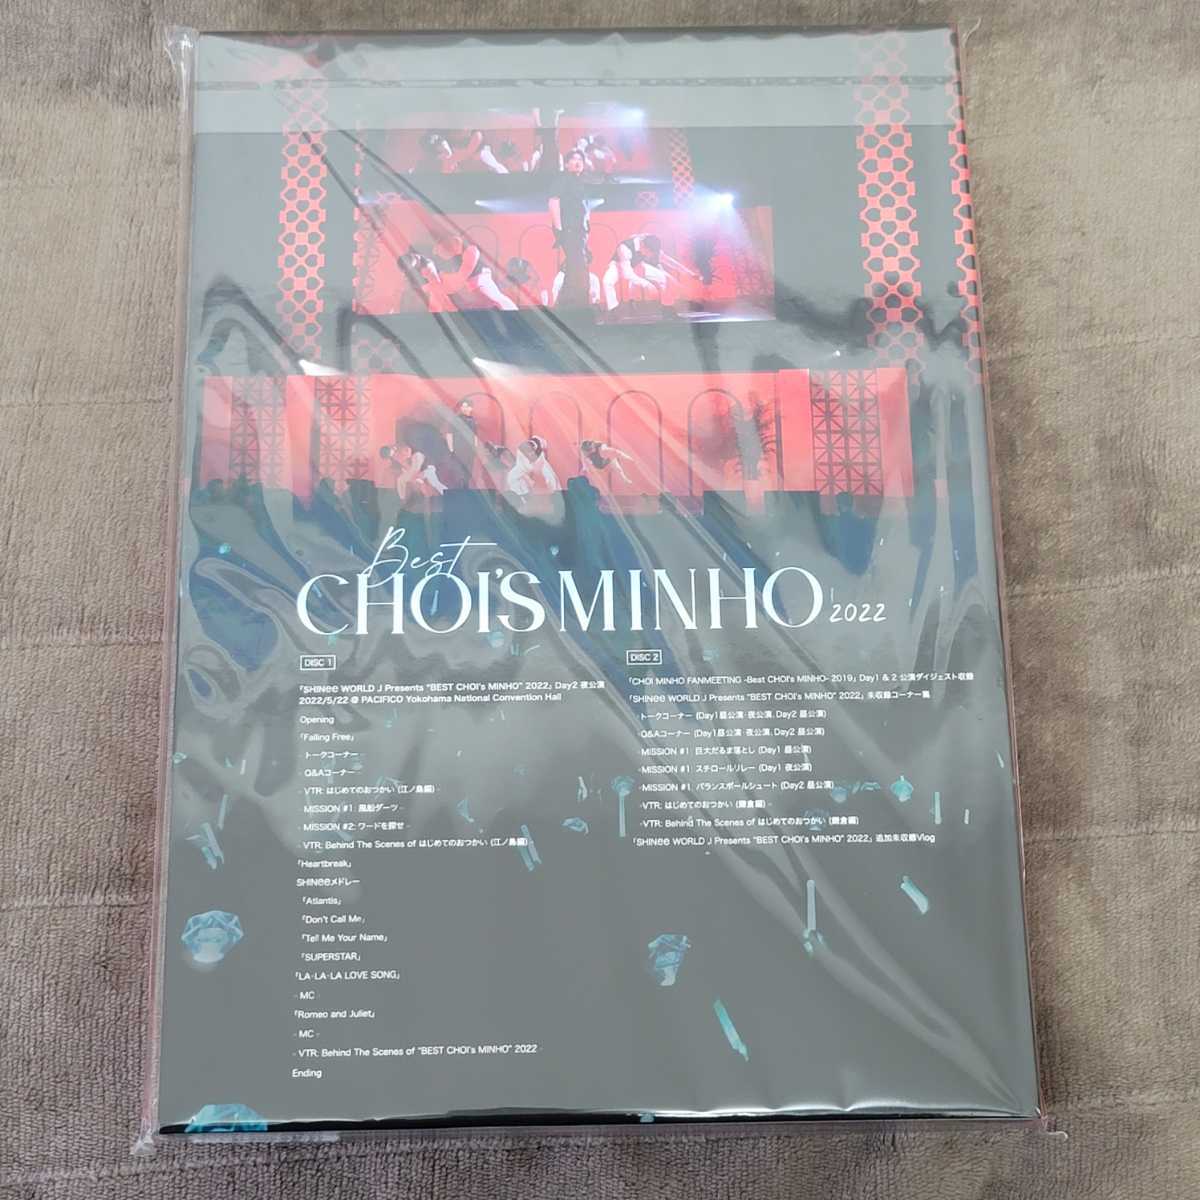 MINHO(SHINee) LIVE Blu-ray SHINee WORLD J Presents BEST CHOI's MINHO 2022  FC限定盤 完全限定生産盤(ファンクラブ限定盤)